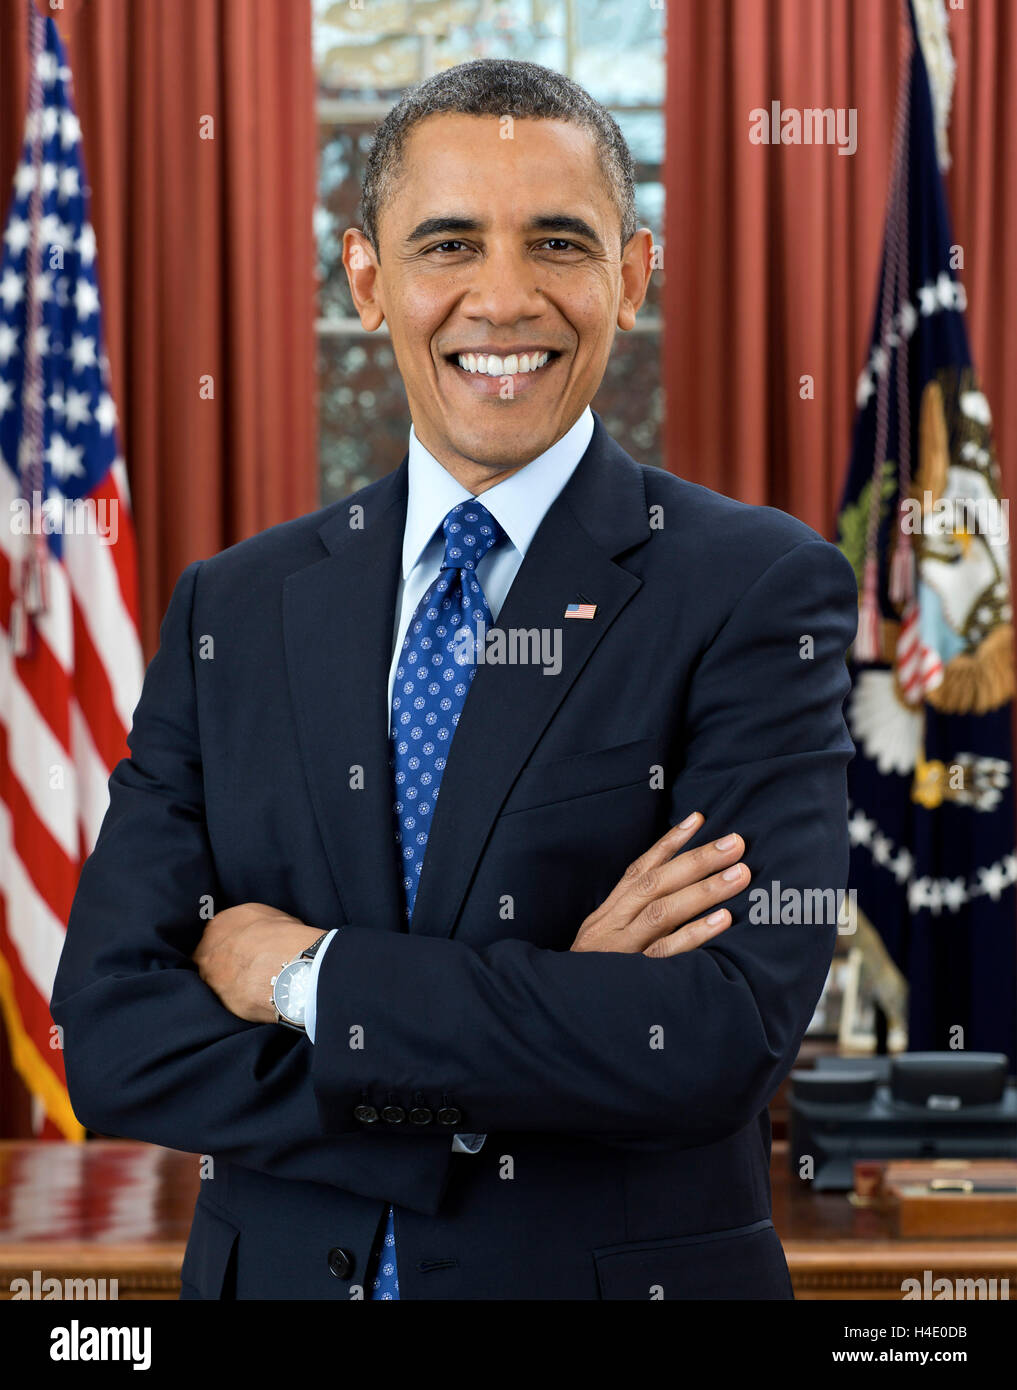 Barack Obama. Official White House portrait of Barack Obama, the 44th President of the USA, December 2012 Stock Photo